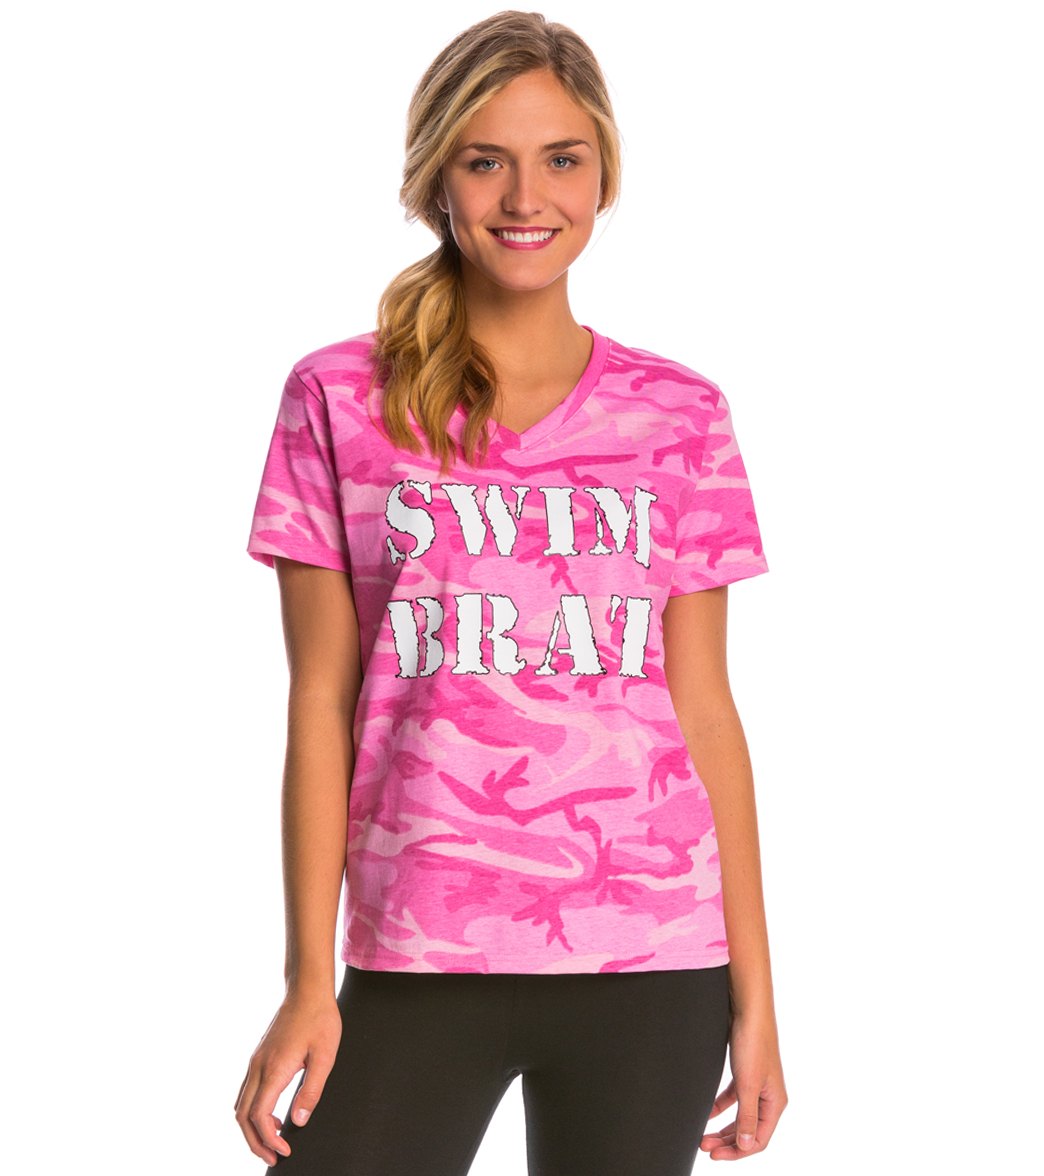 Ambro Manufacturing Women's Short Sleeve Swim Brat Tee Shirt - Pink Xl Cotton - Swimoutlet.com